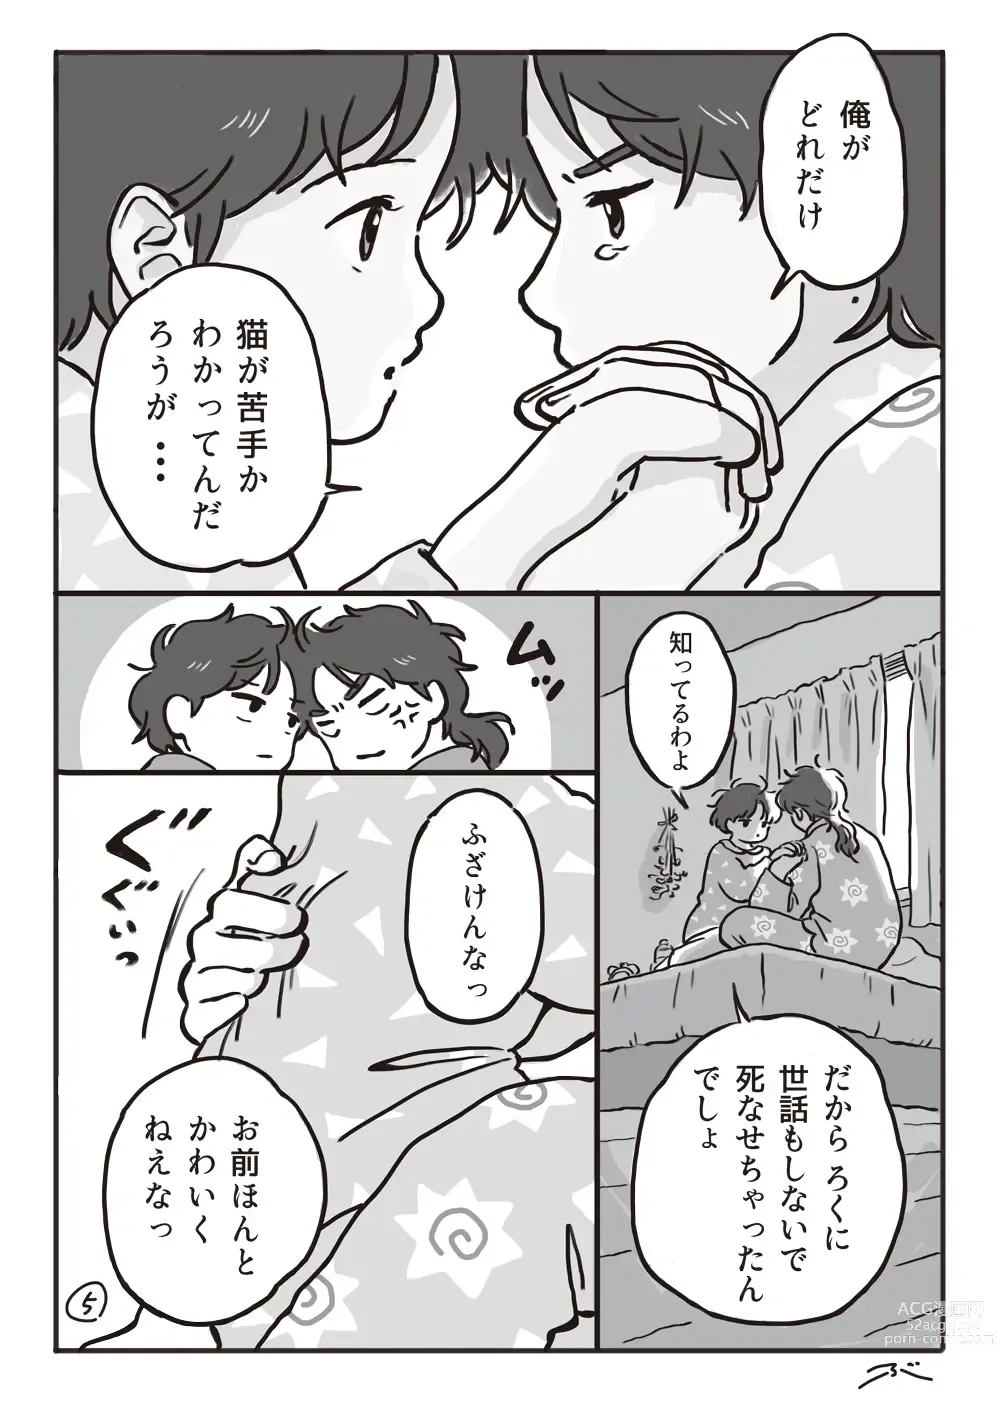 Page 6 of doujinshi Haiiro no Asa...